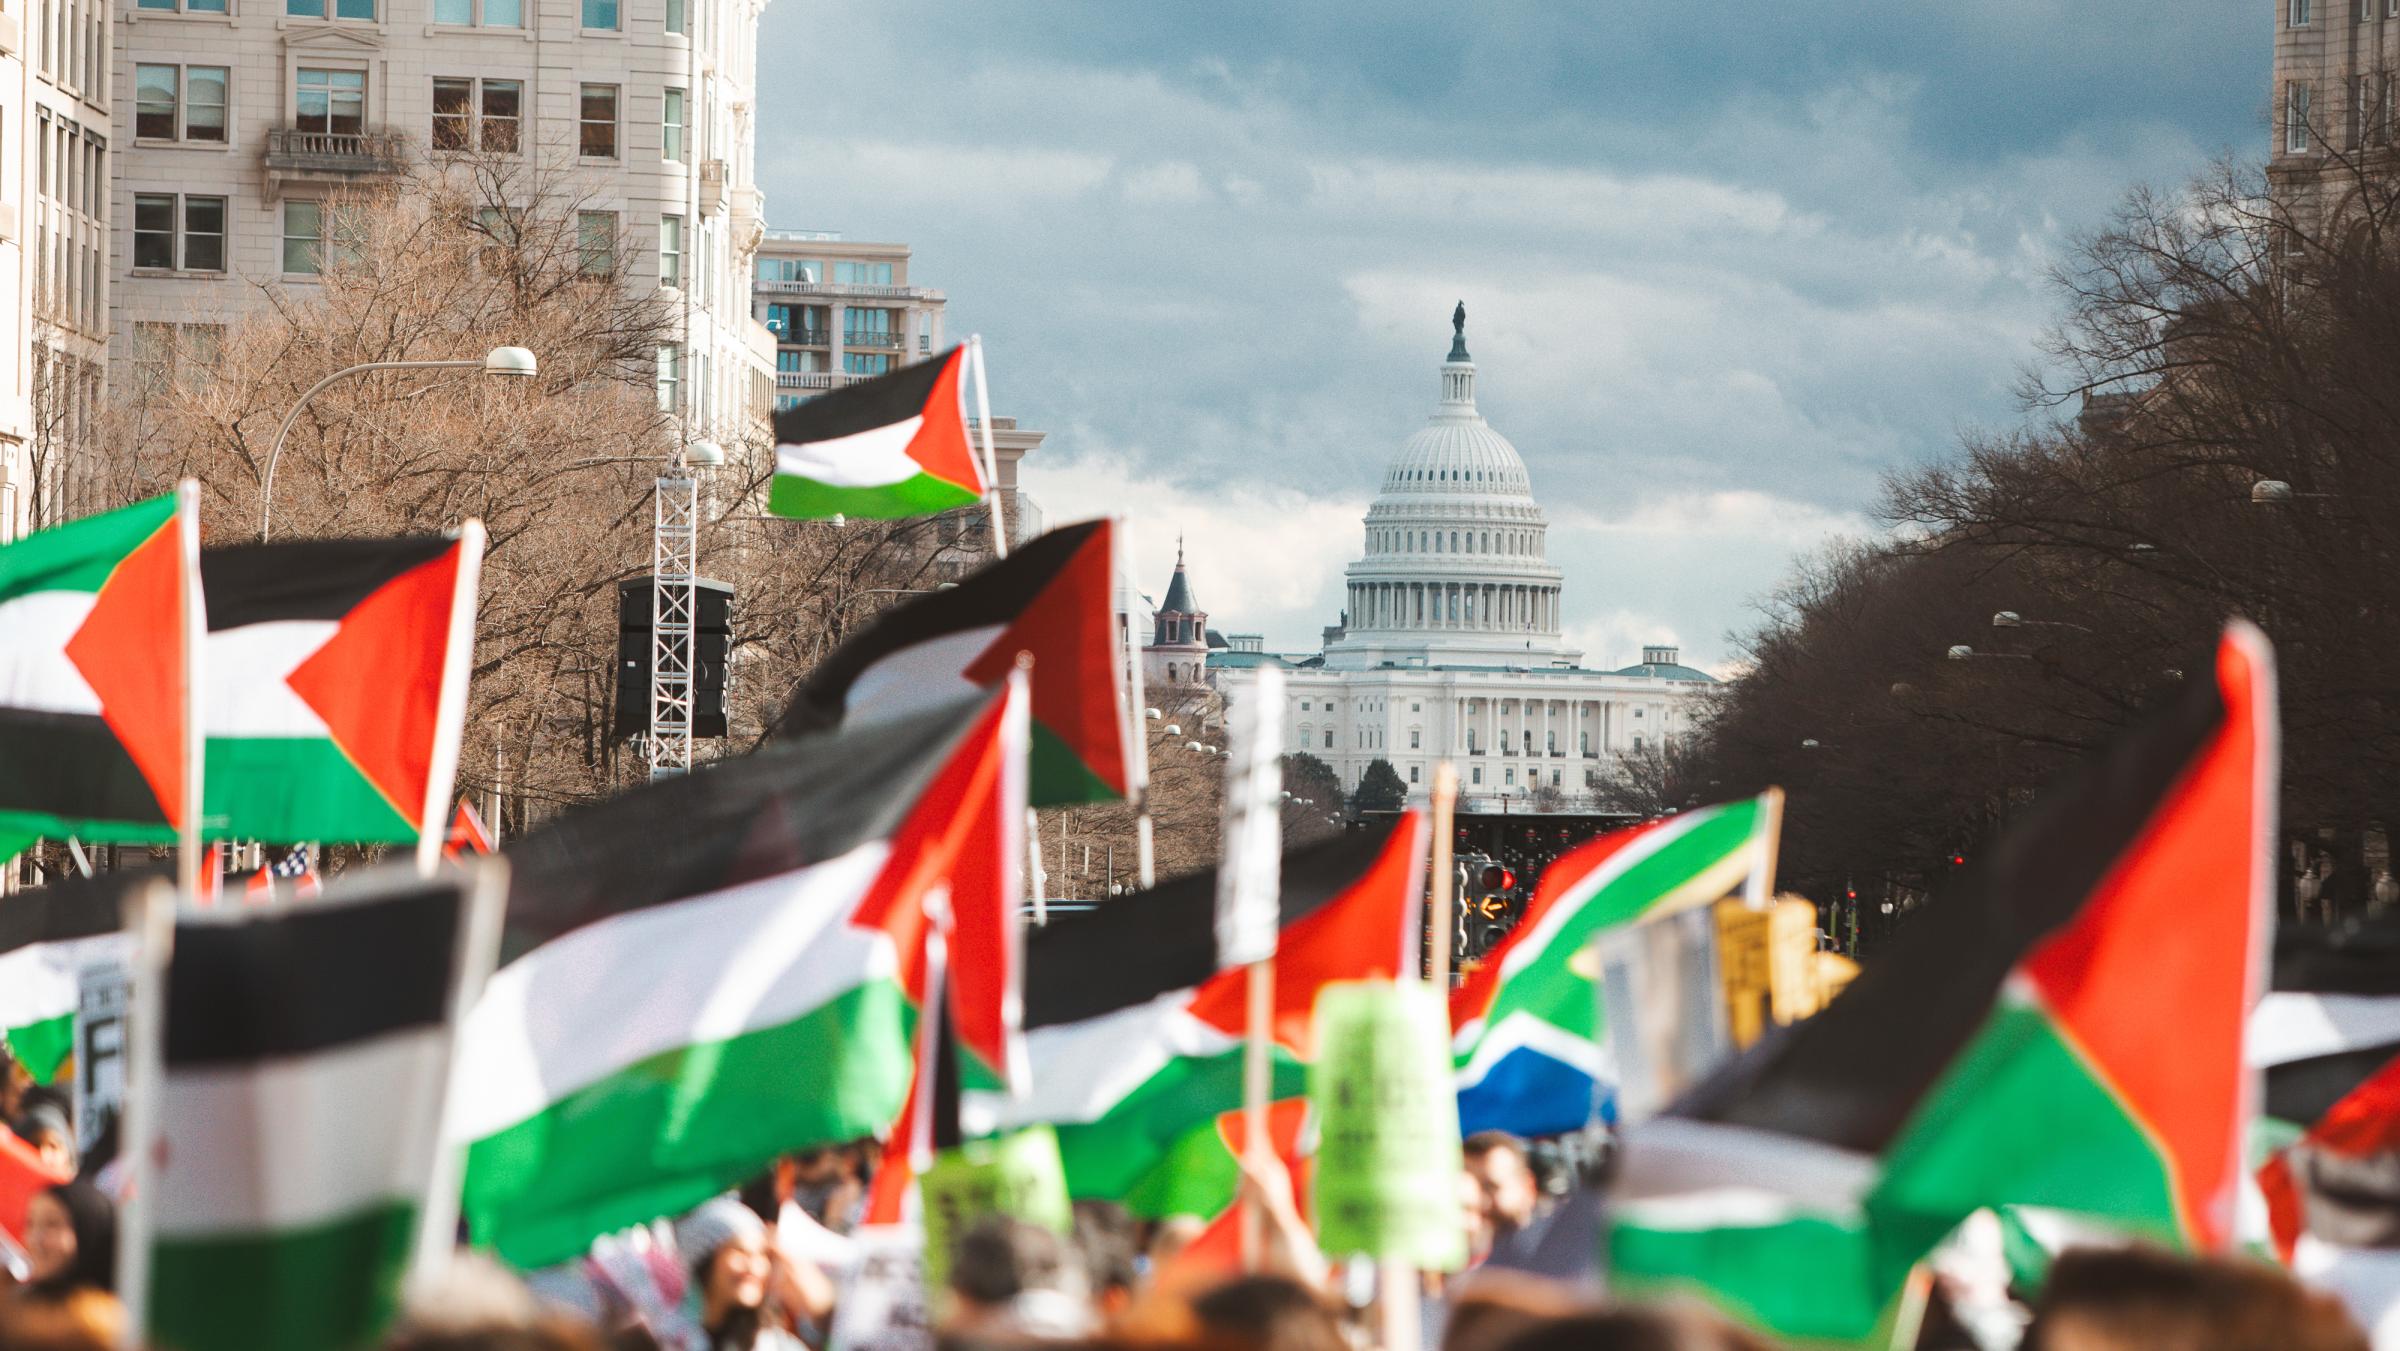 For Gaza: Ceasefire March in Washington D.C. - Upwards of 400,000 Pro-Palestine protestors take the...